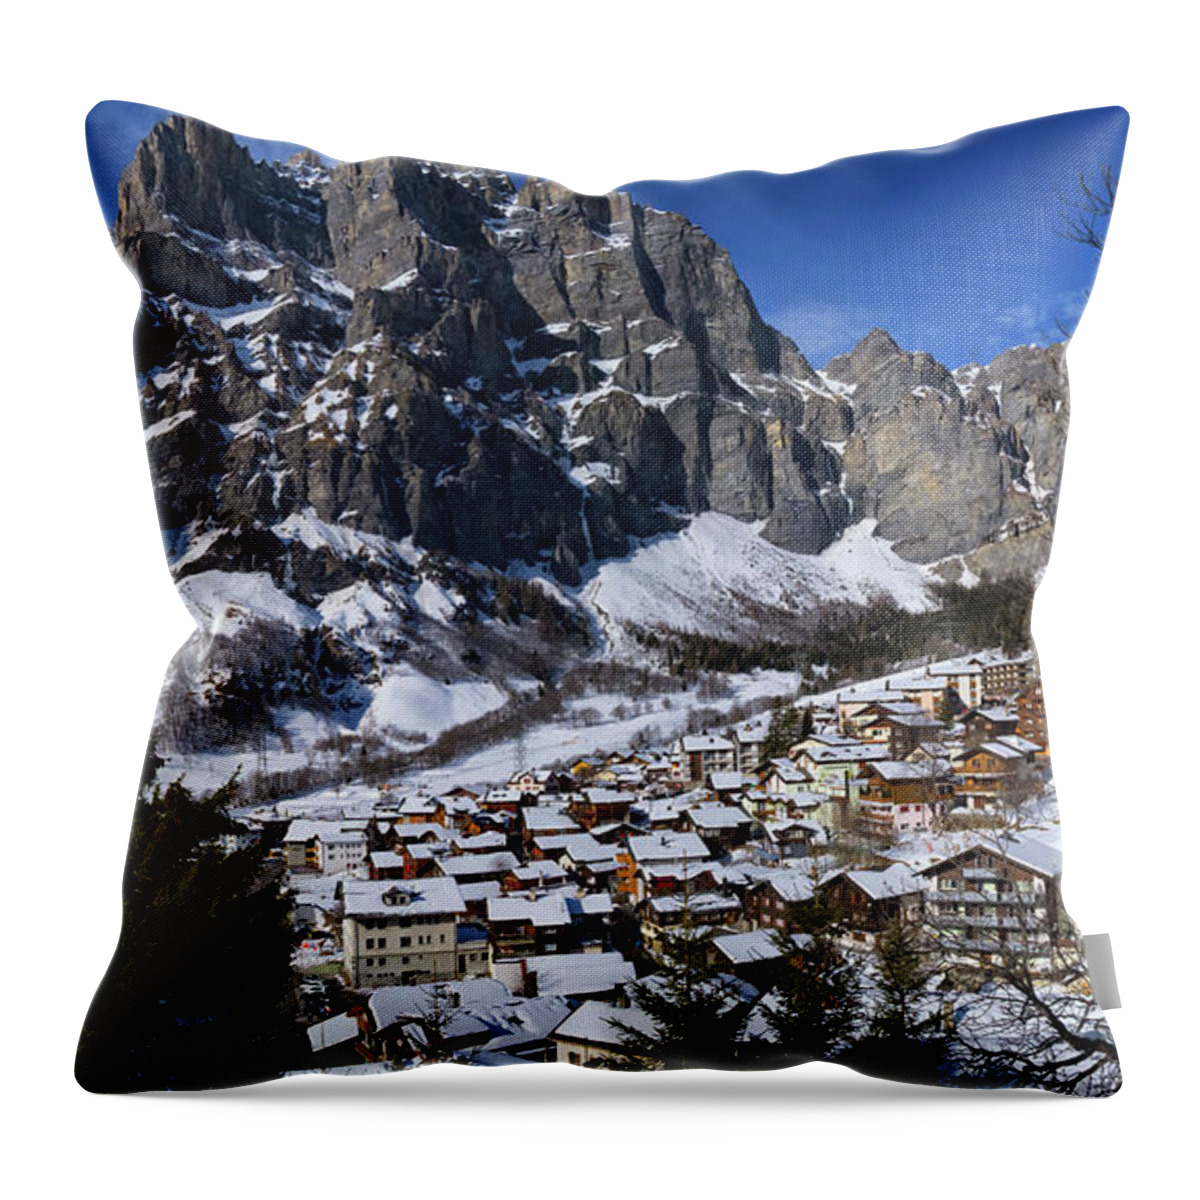 Leuk Throw Pillow featuring the photograph Leuk, Valais, Switzerland by Elenarts - Elena Duvernay photo